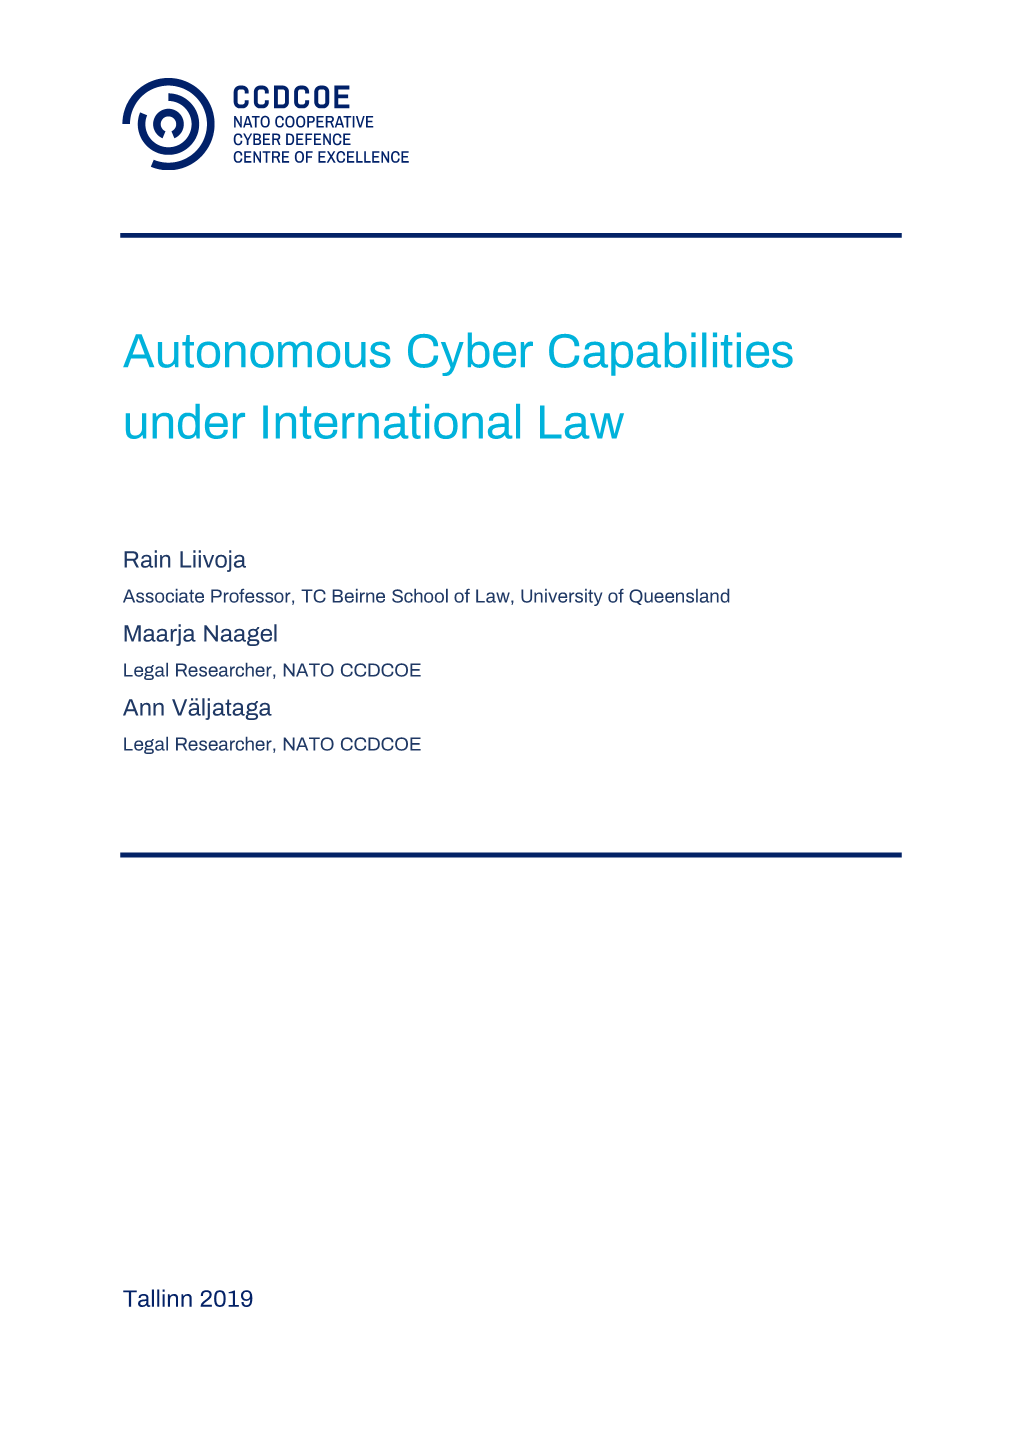 Autonomous Cyber Capabilities Under International Law